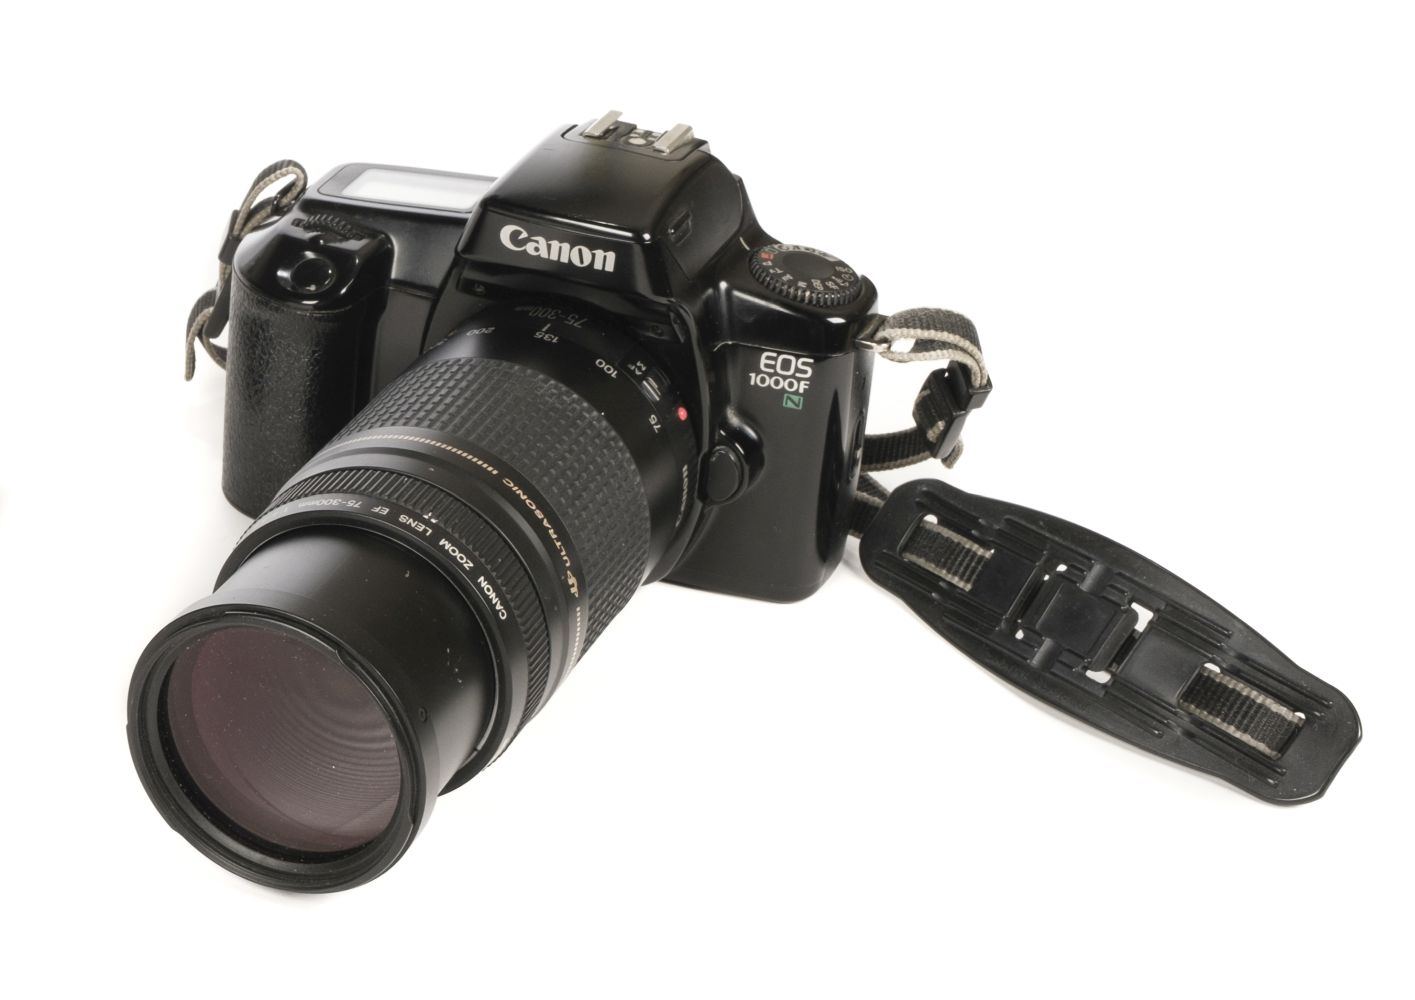 Sigma 50-500mm f/4-6.3 APO EX Super-Telephoto Lens, Canon camera & lenses + accessories - Image 4 of 4